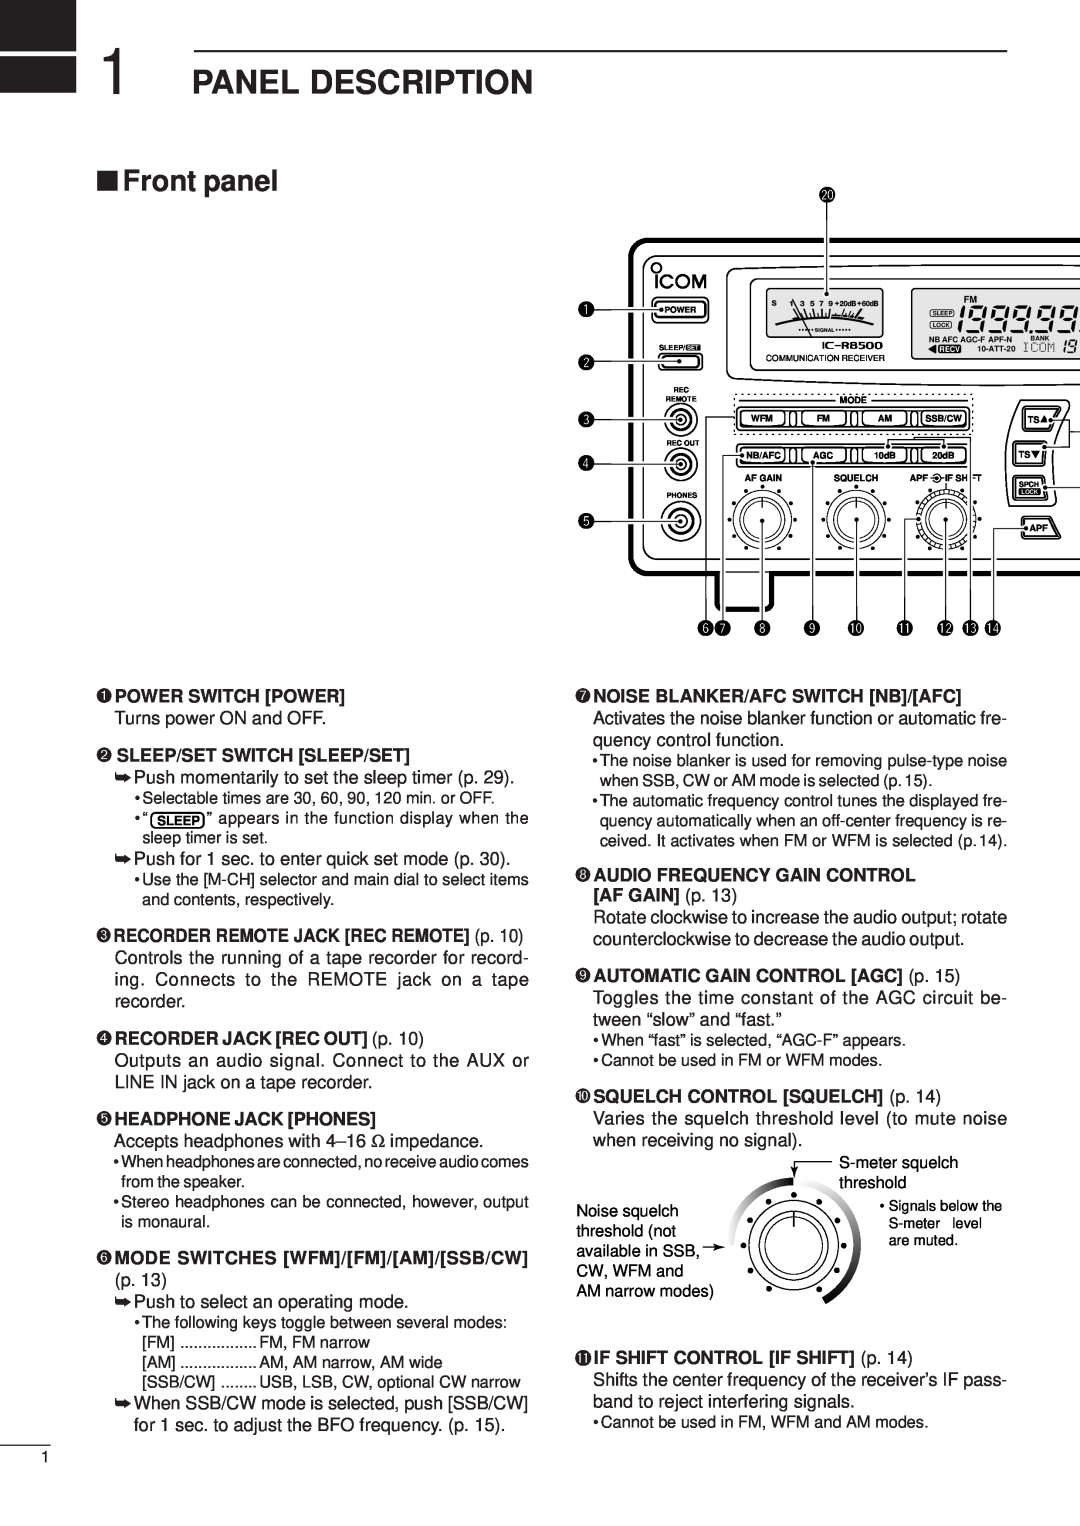 Icom IC-R8500 Panel Description, Front panel, ➊ POWER SWITCH POWER Turns power ON and OFF, ➋ SLEEP/SET SWITCH SLEEP/SET 